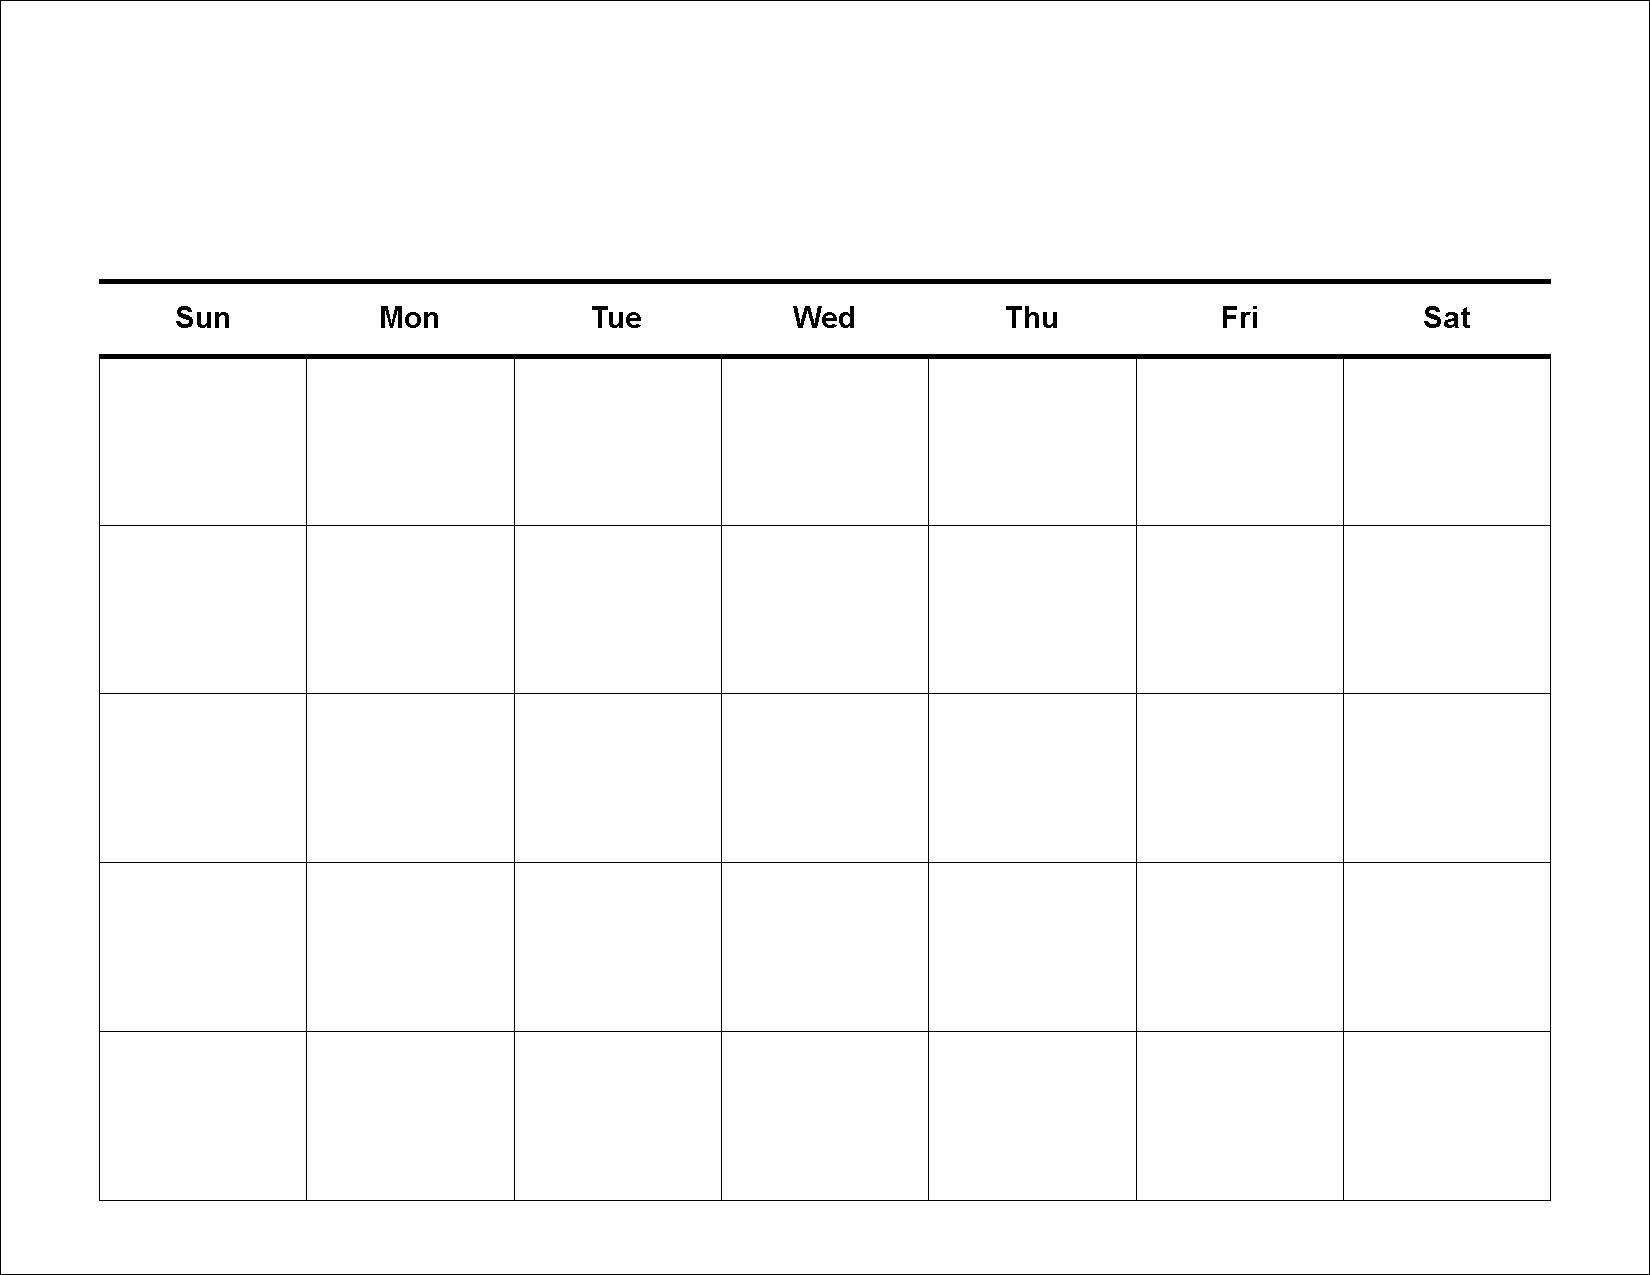 Free 5 Day Calendar Template | Printable Calendar Templates 2019 5 Day Calendar Template